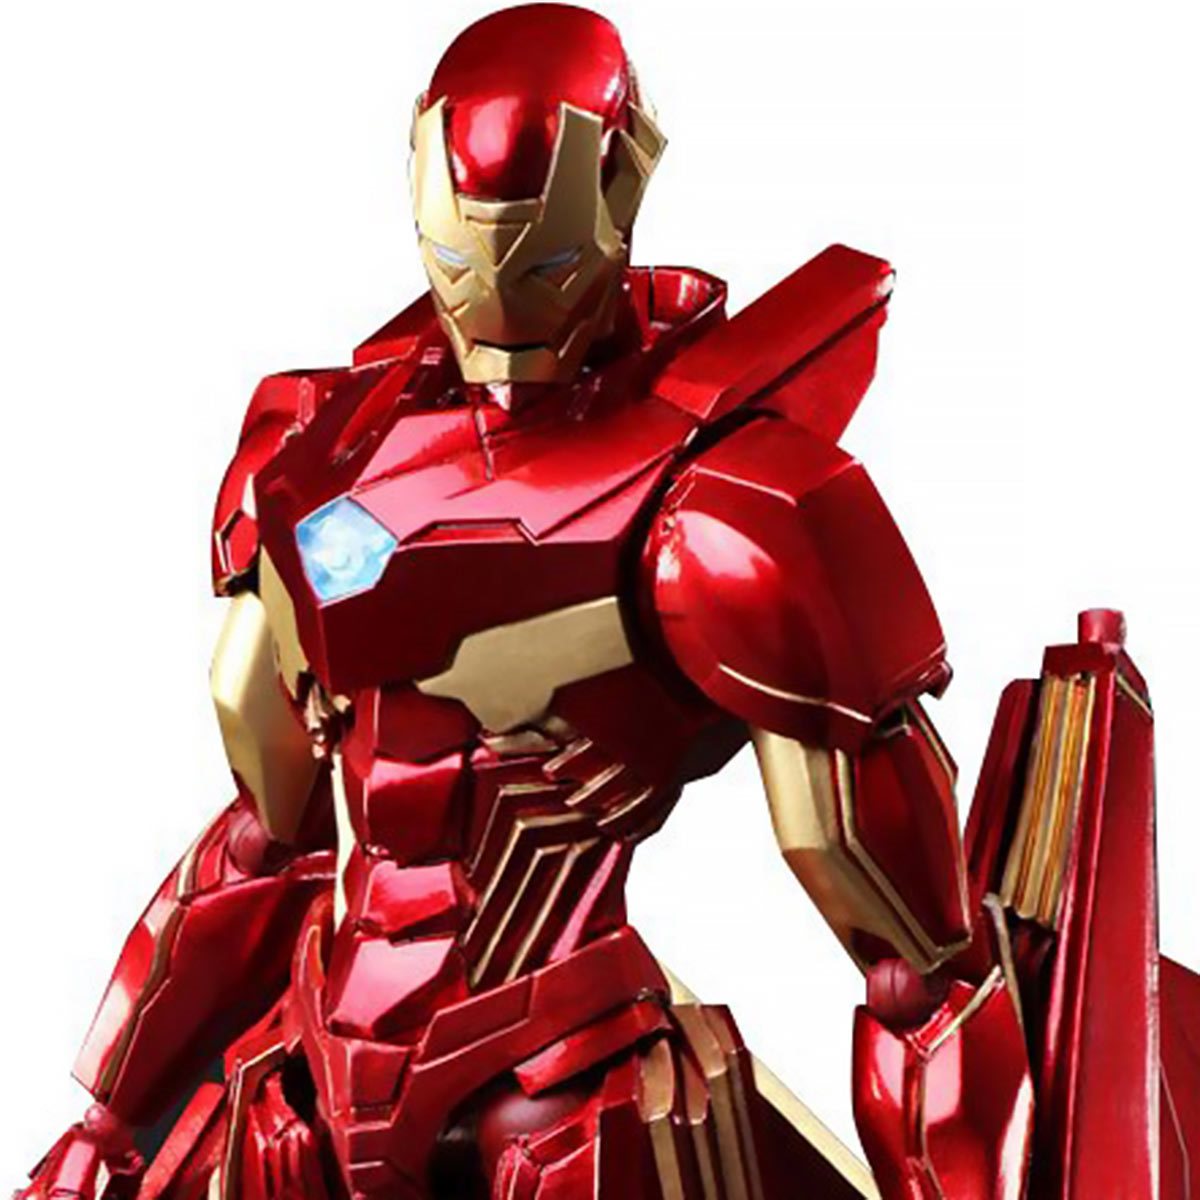 Iron Man: War Machine Variant Play Arts Kai Action Figure (Figures)